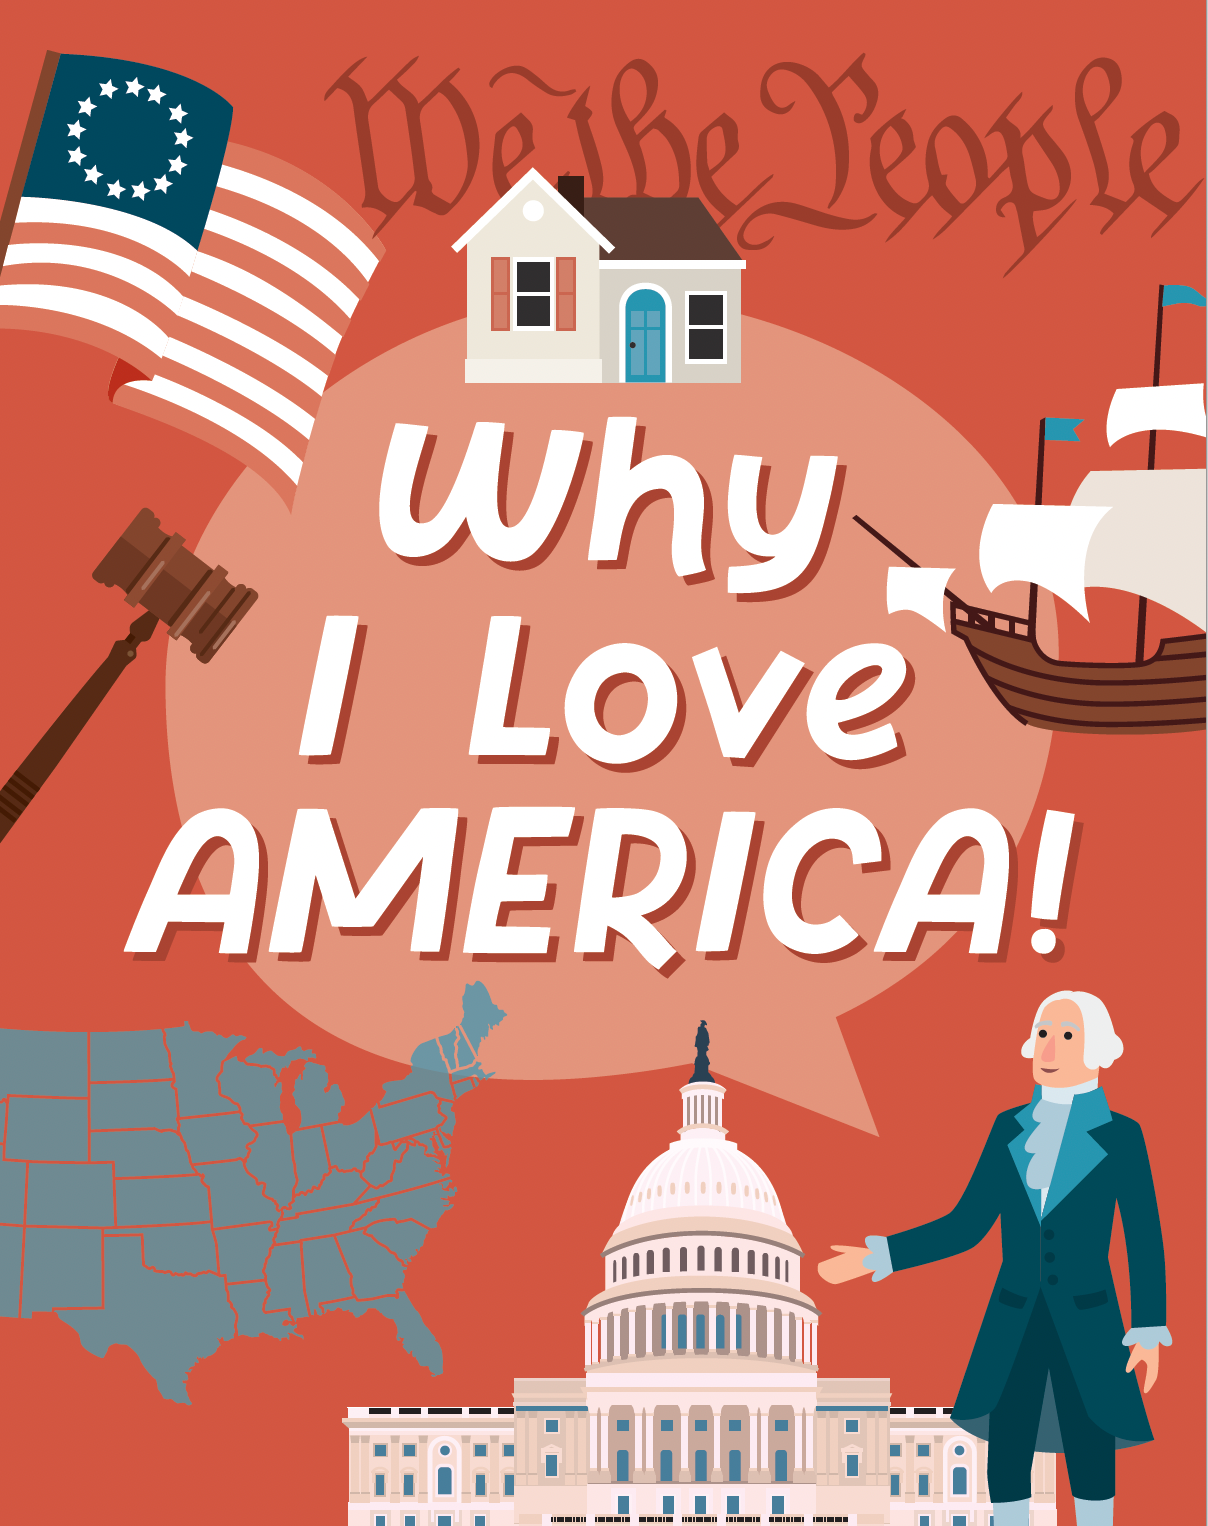 Why I Love America PDF English